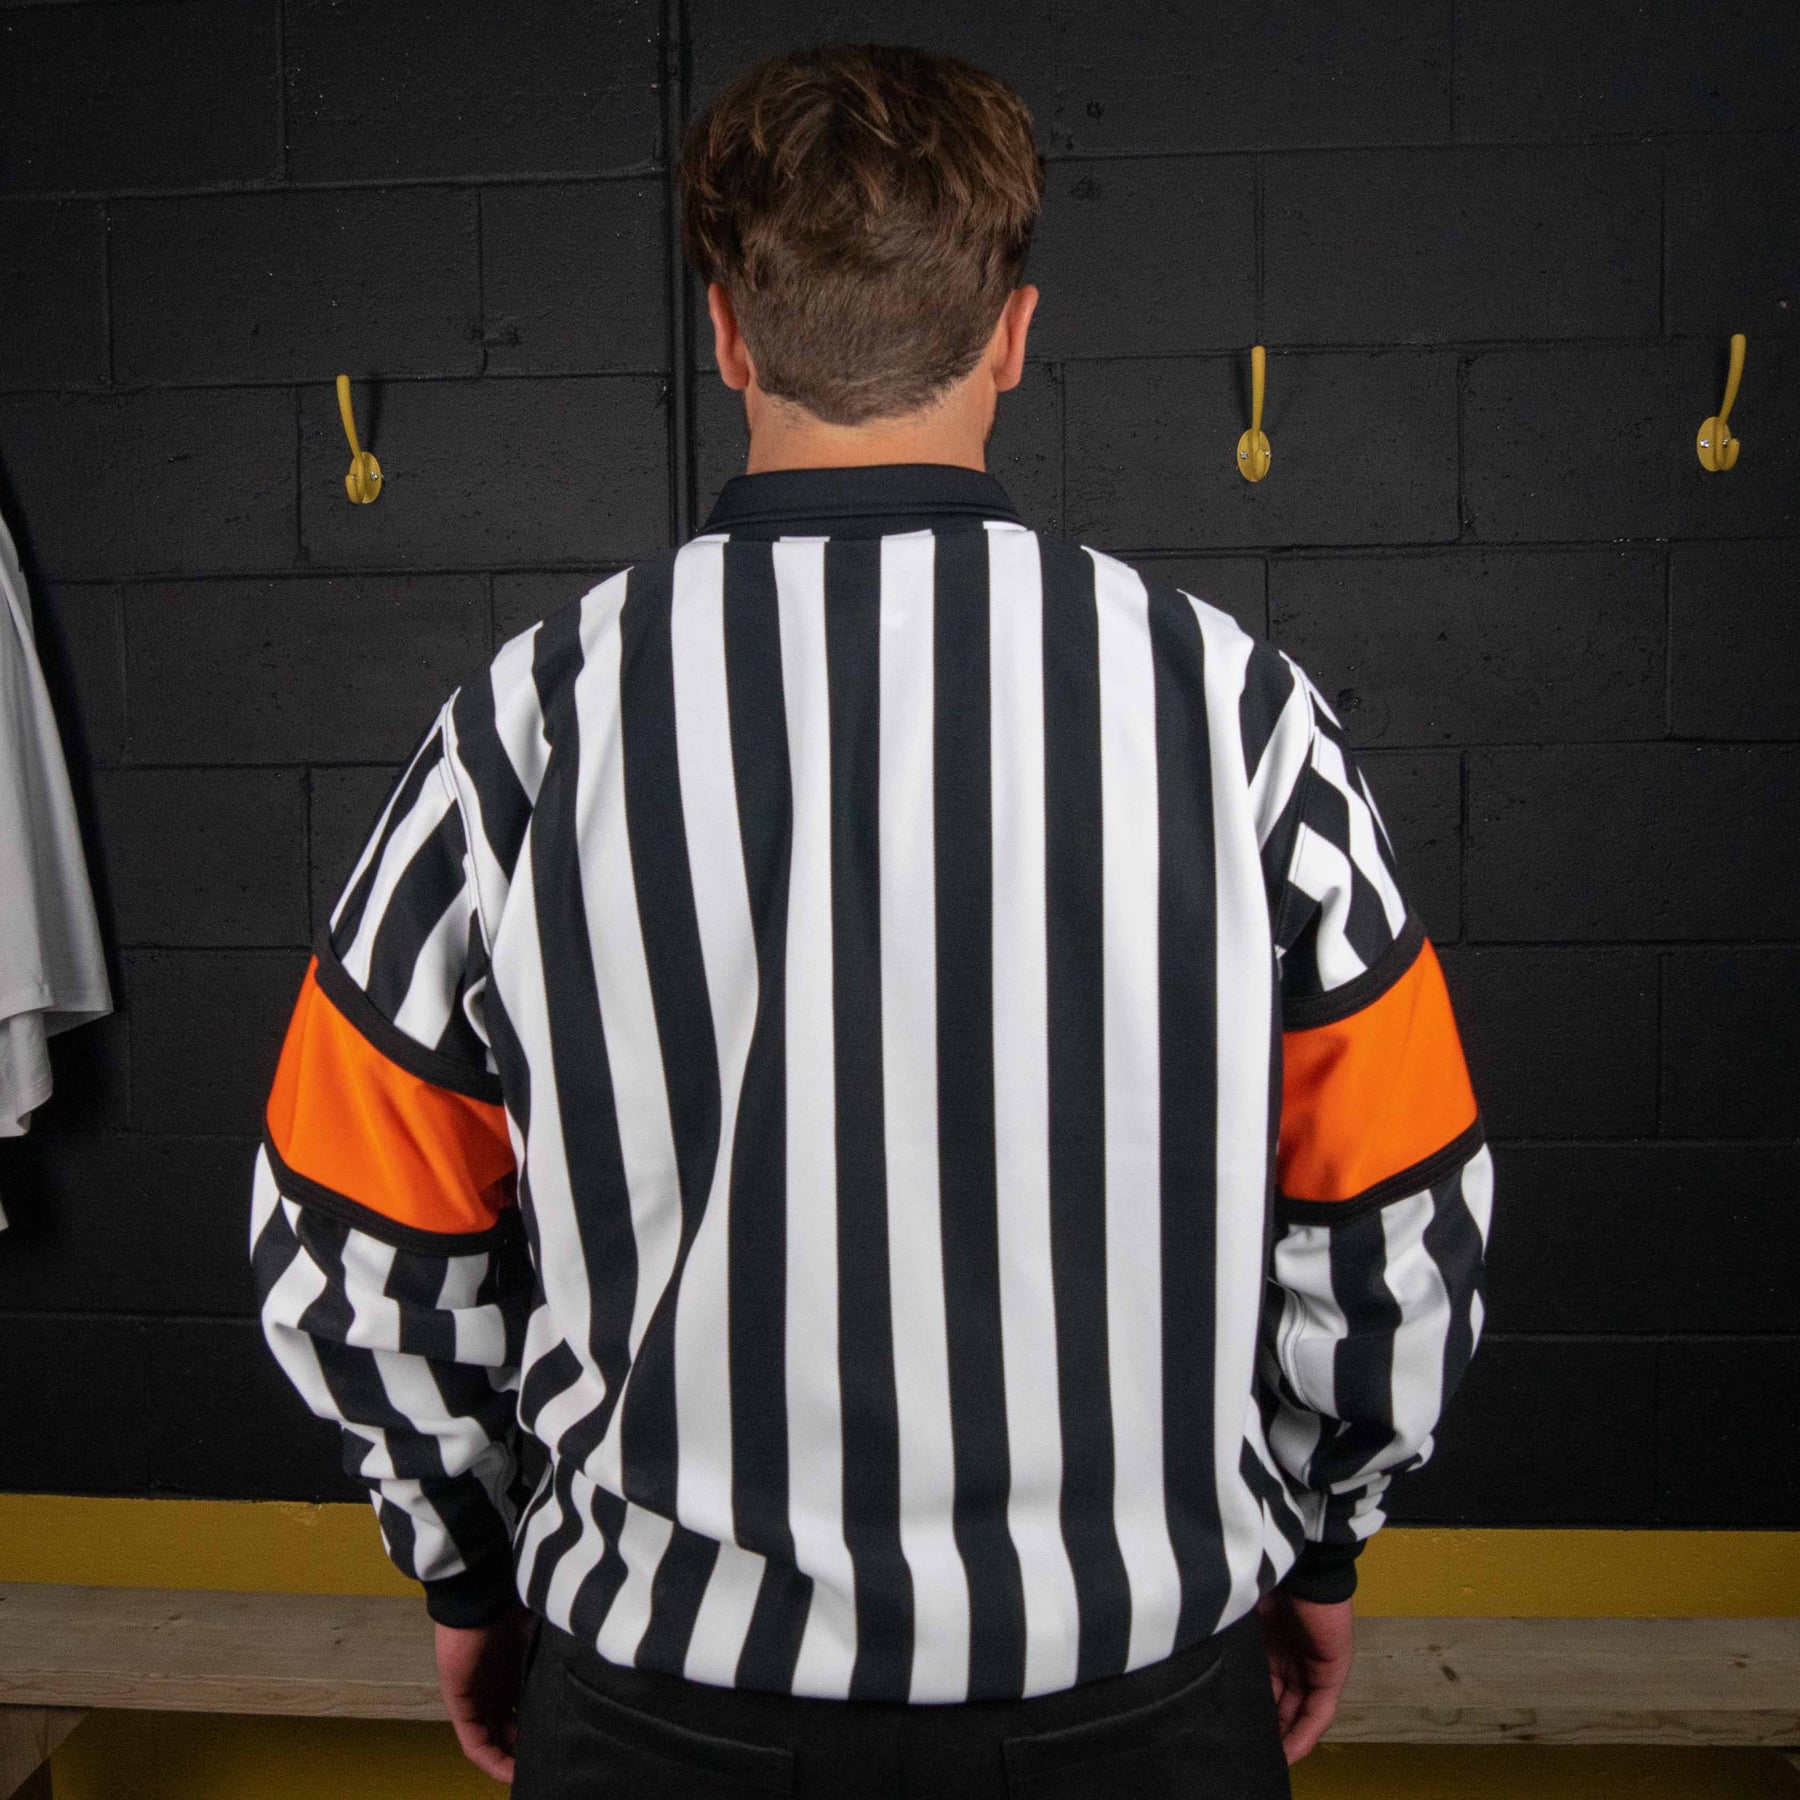 MOQ 5 pcs $30 each Standard Black Orange Hockey Referee Jersey